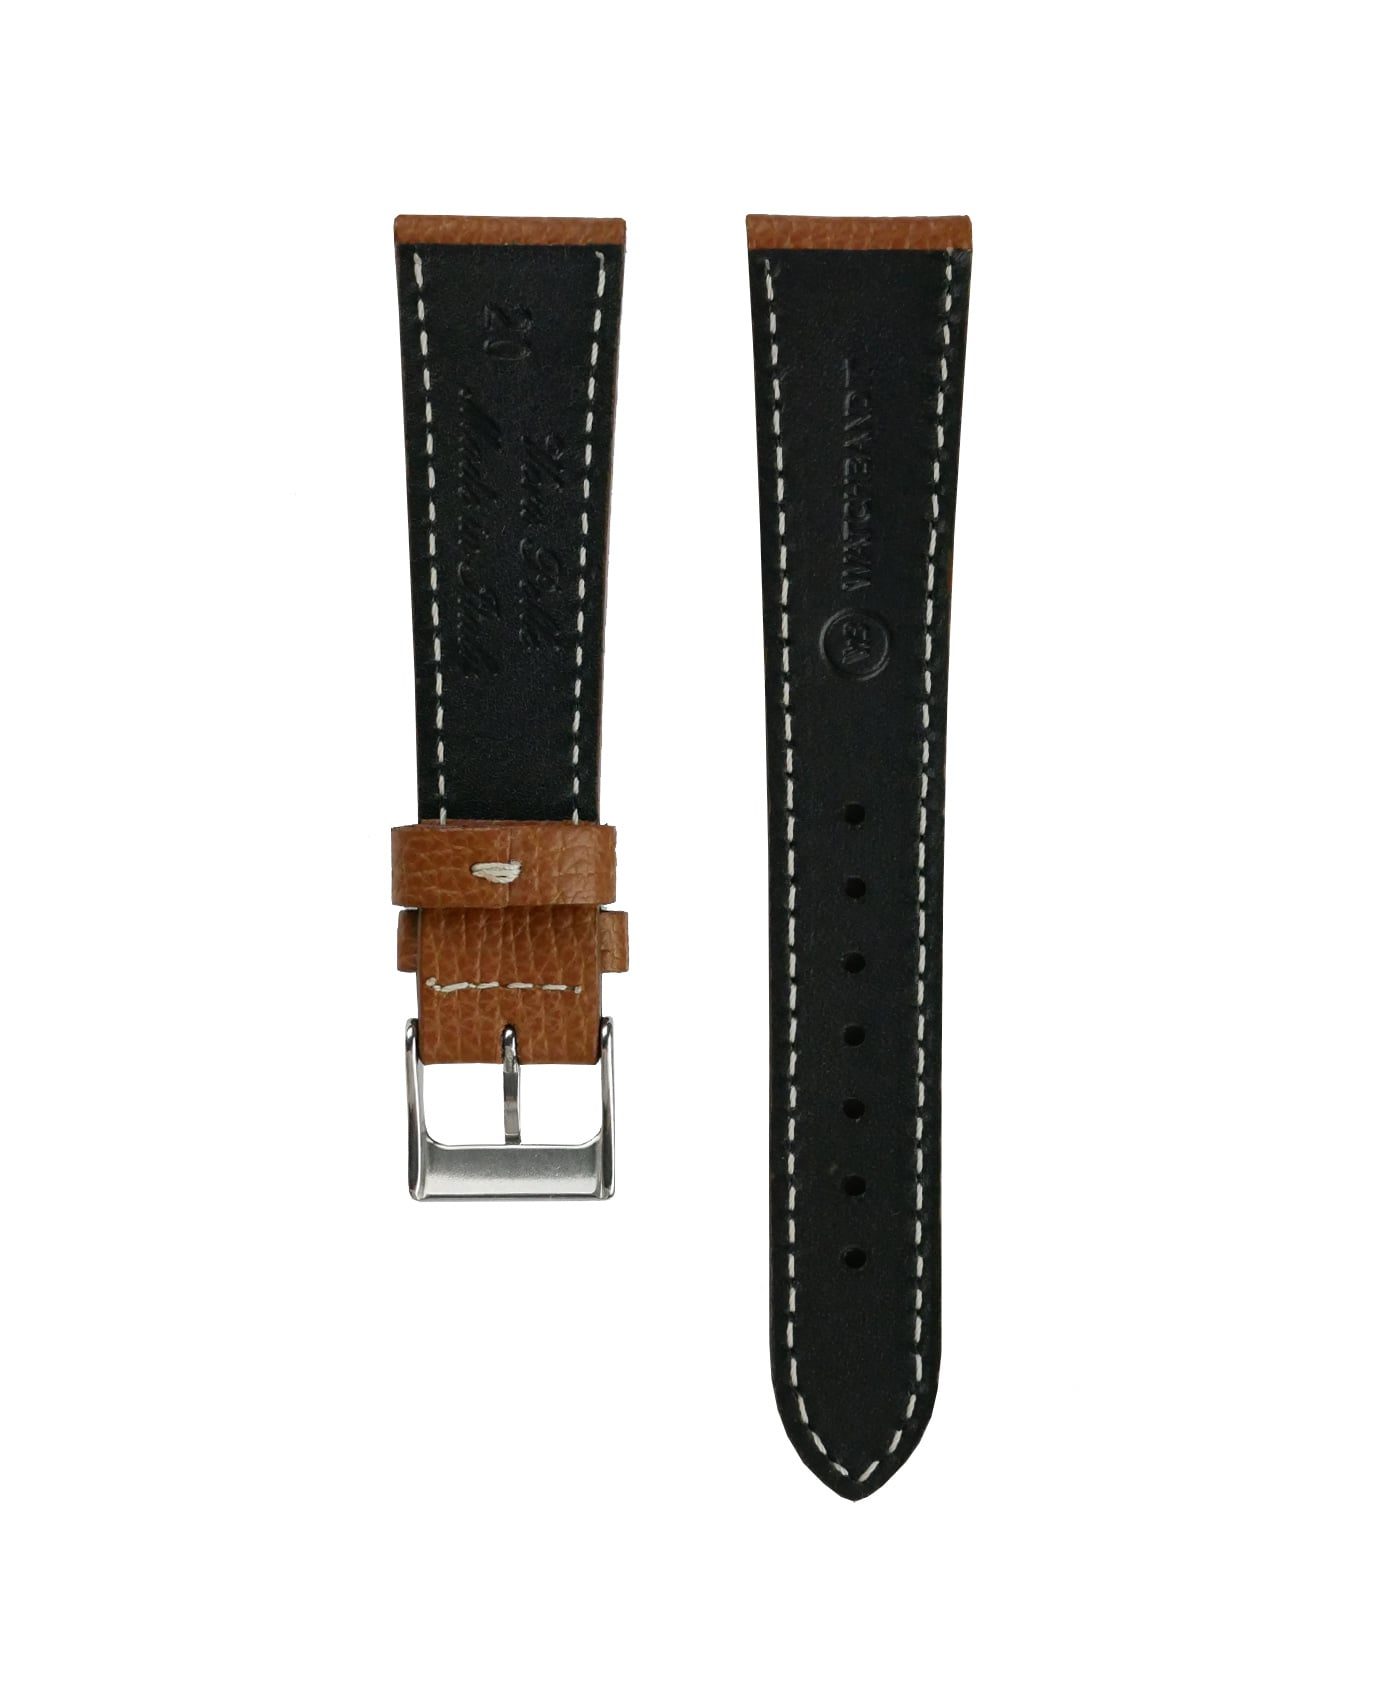 Textured calfskin leather watch strap tanned light brown back watchbandit